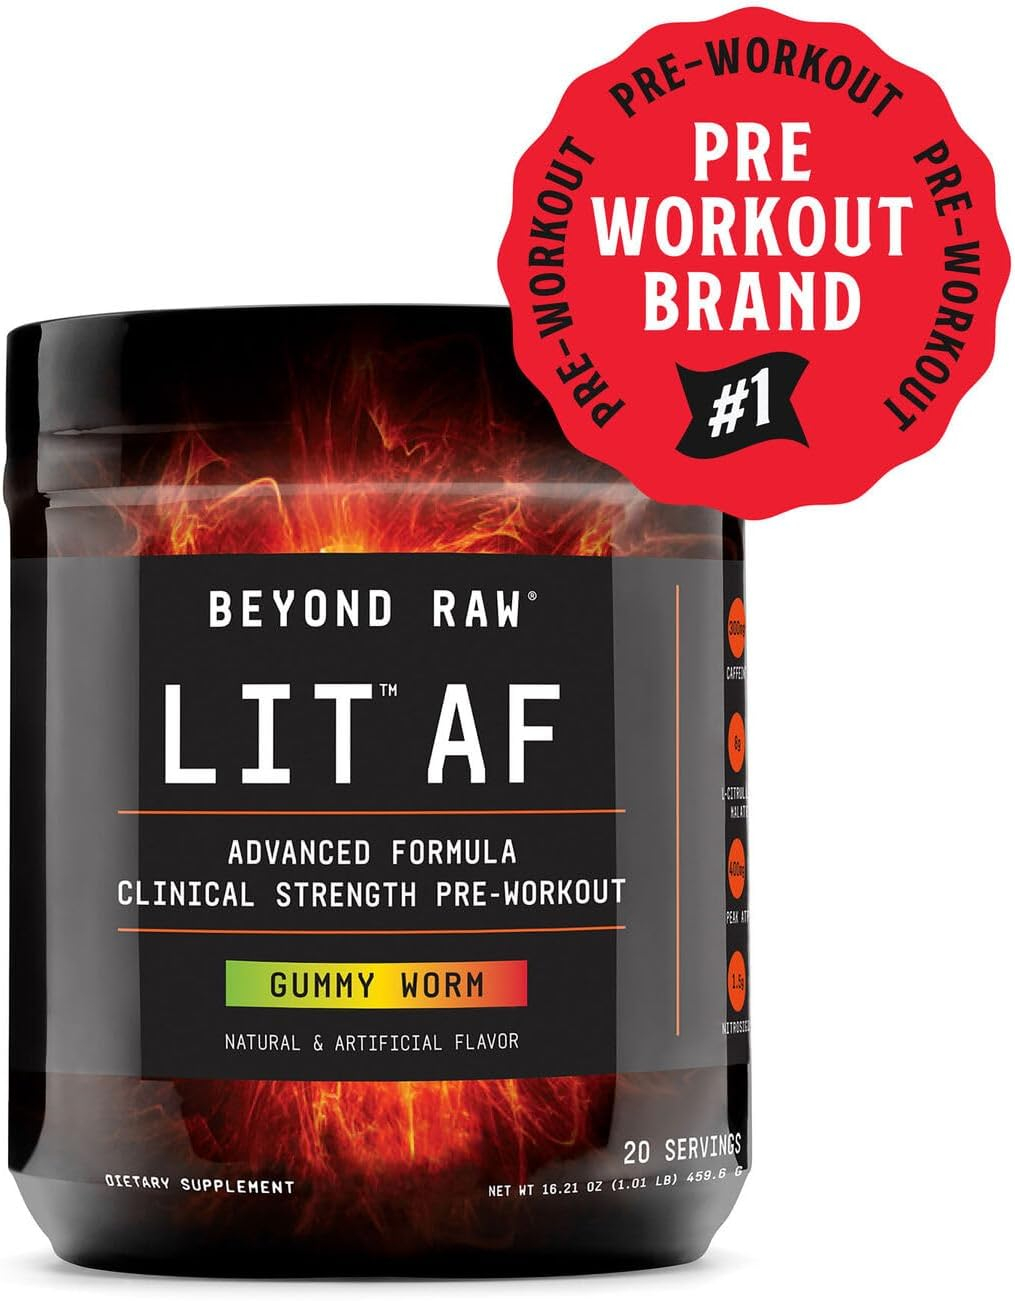 BEYOND RAW LIT AF | Advanced Formula Clinical Strength Pre-Workout Powder | Contains Caffeine, L-Citruline, and Nitrosigine | Gummy Worm | 20 Servings